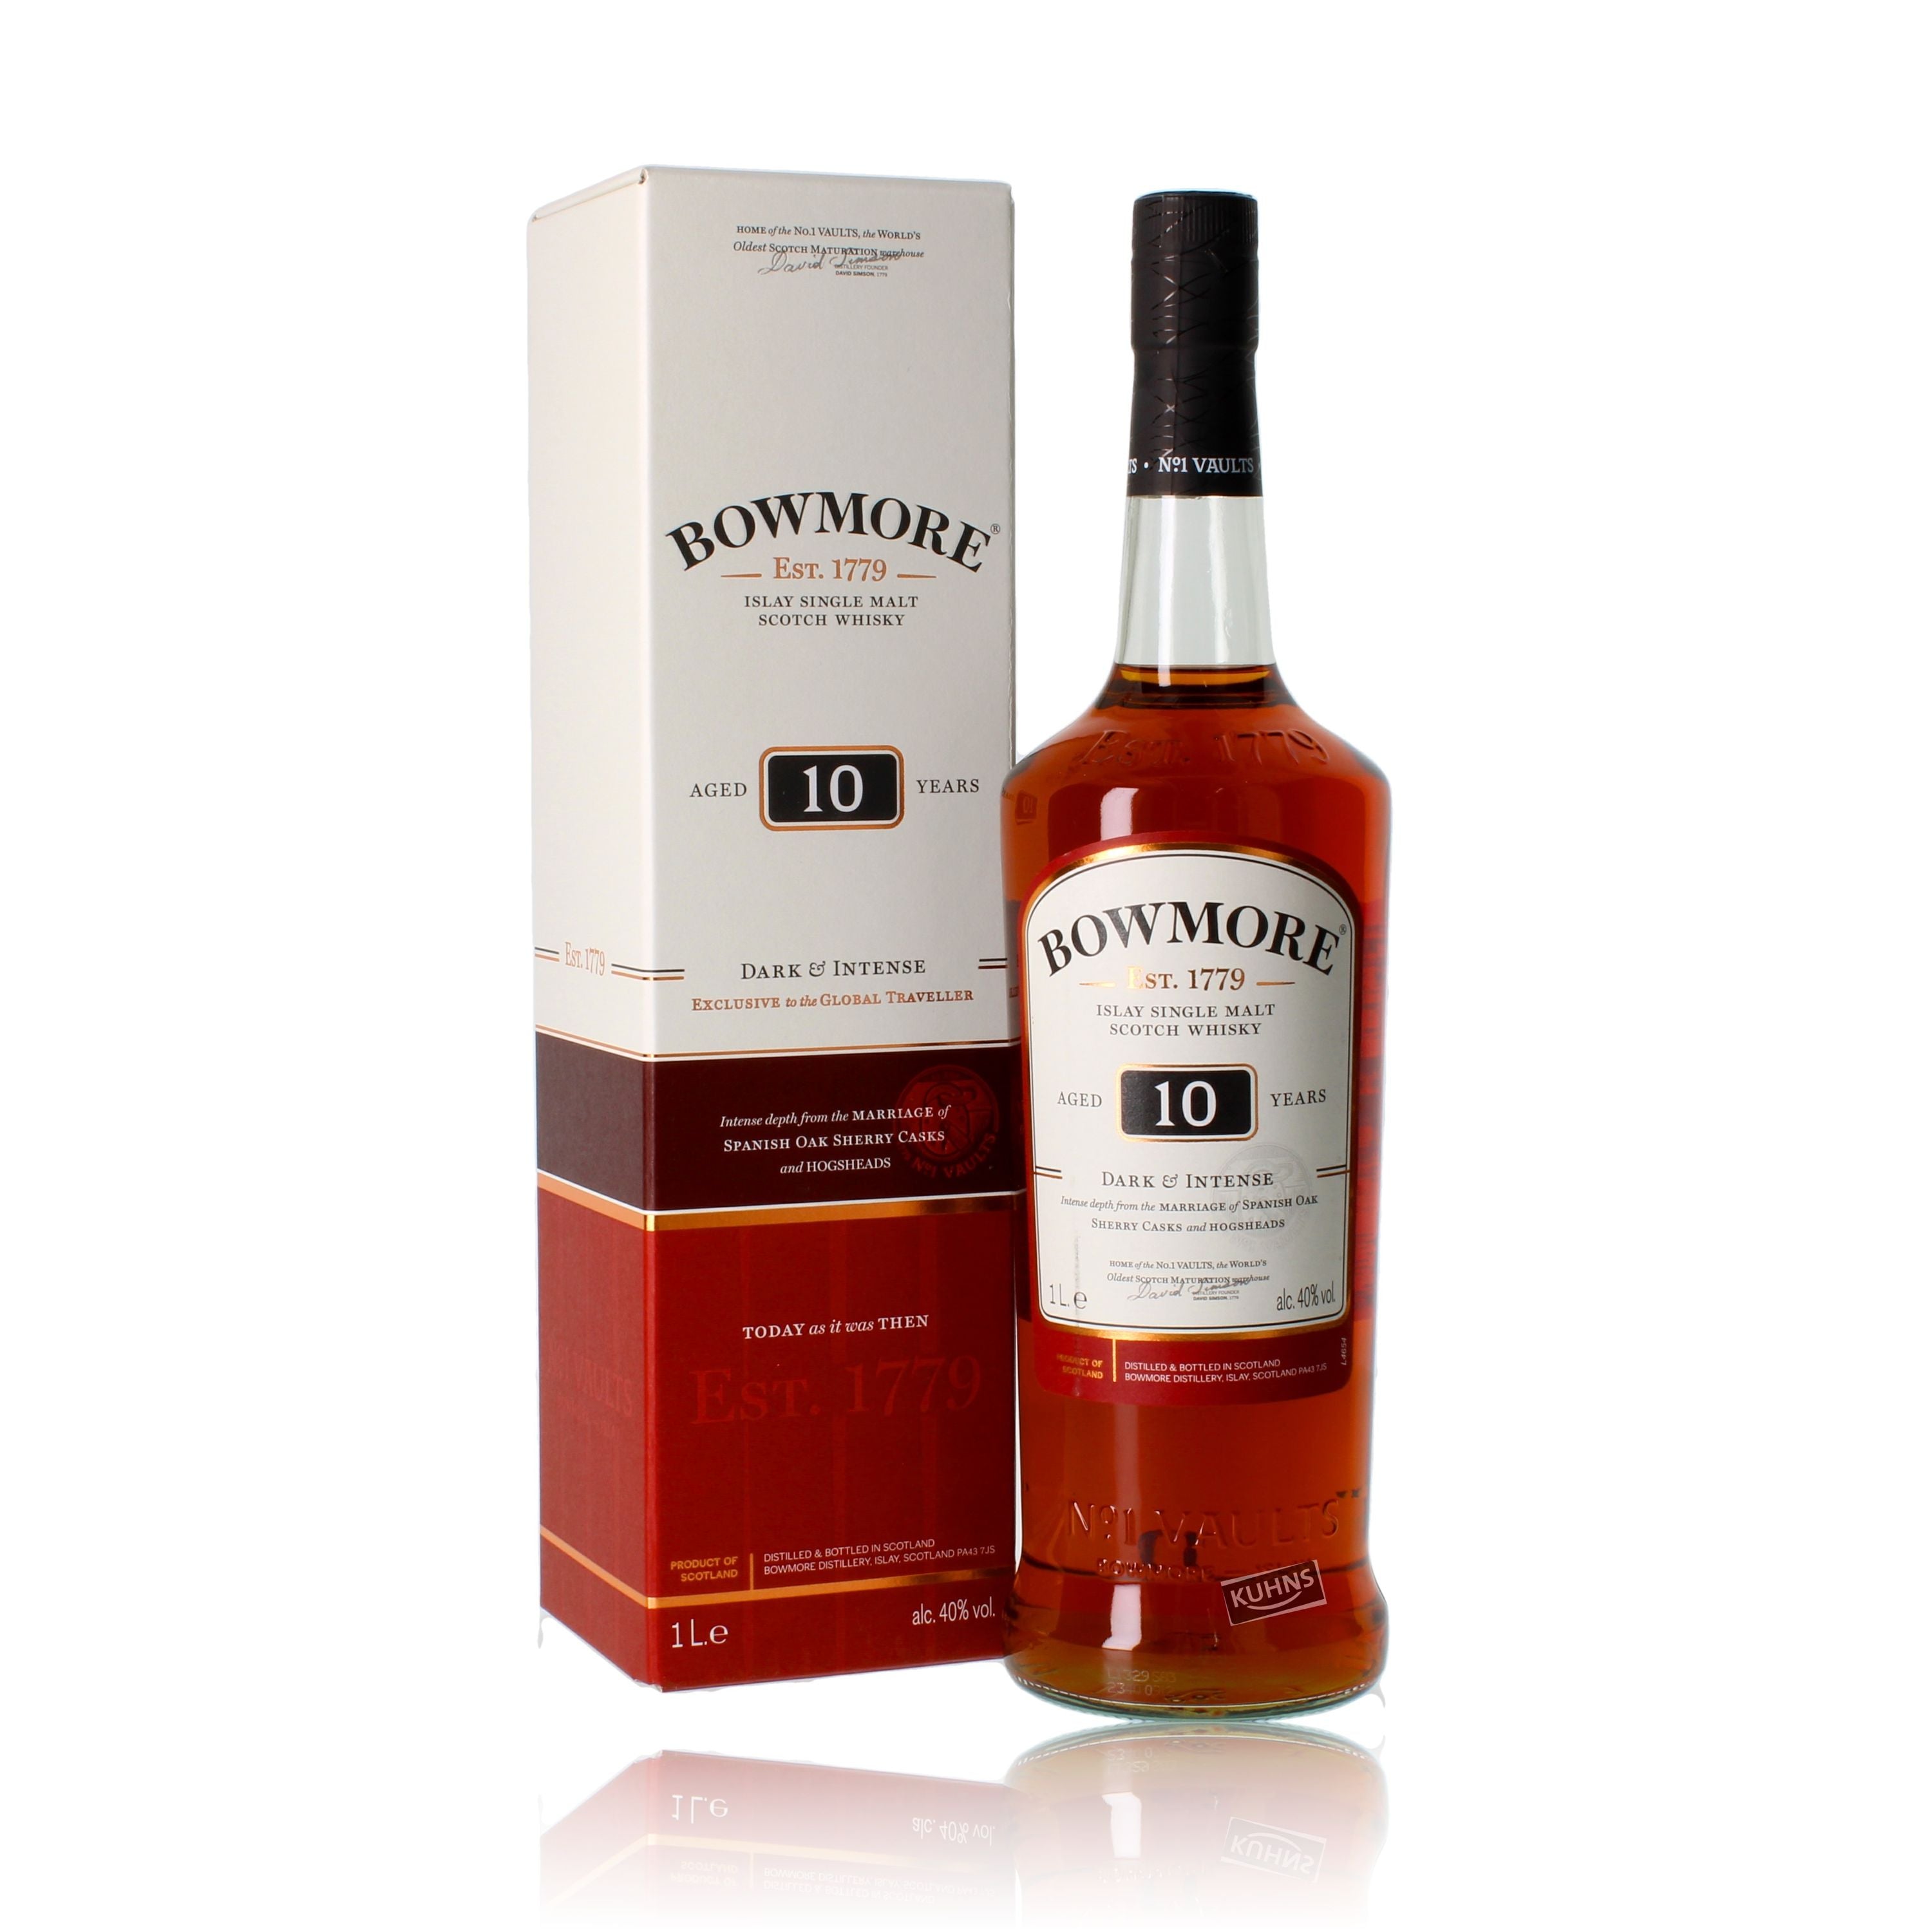 Bowmore 10 Years Dark and Intense Islay Single Malt Scotch Whiskey 1.0l, alc. 40% by volume